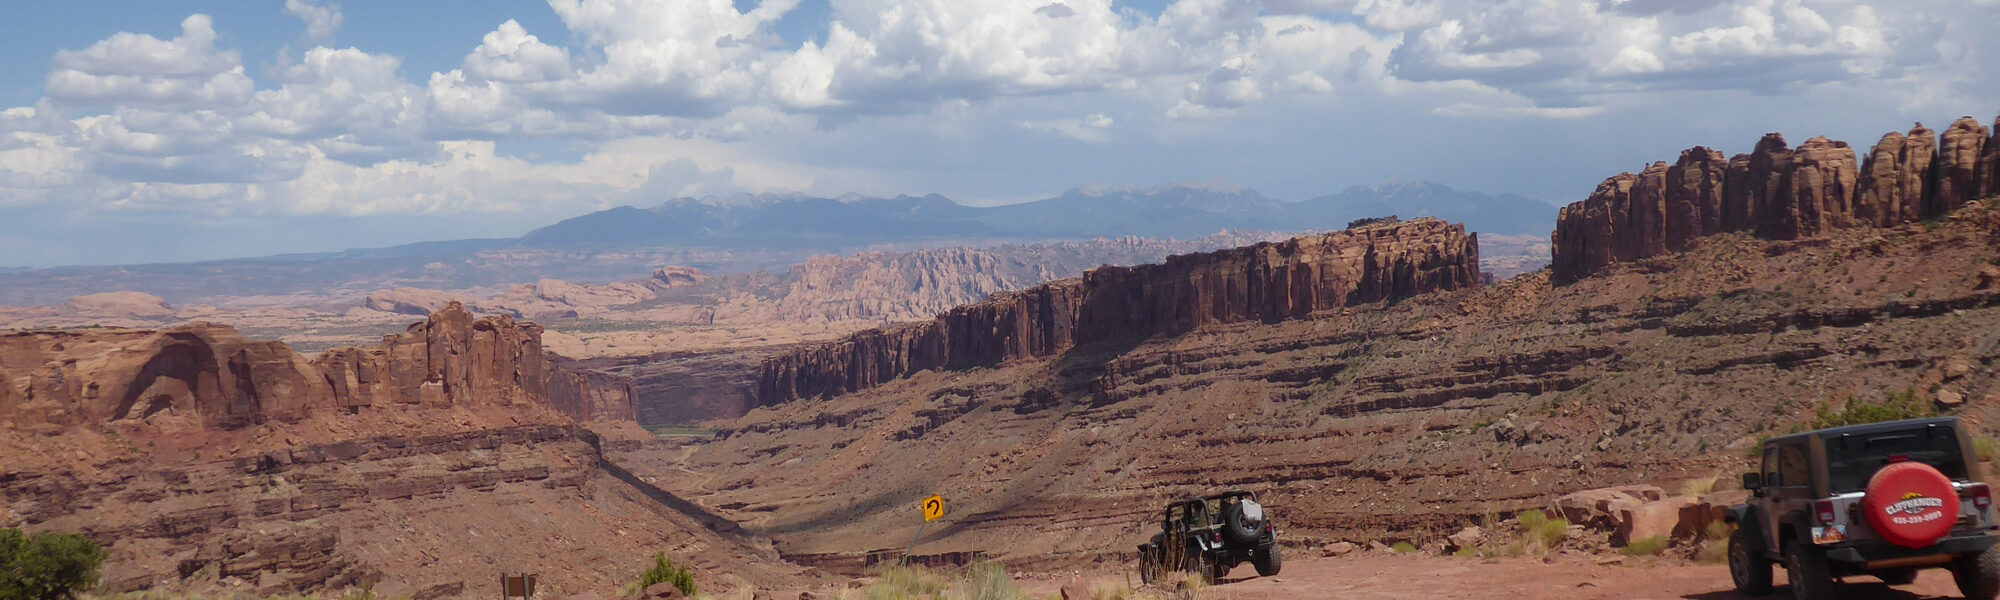 Moab - Utah - Verenigde Staten